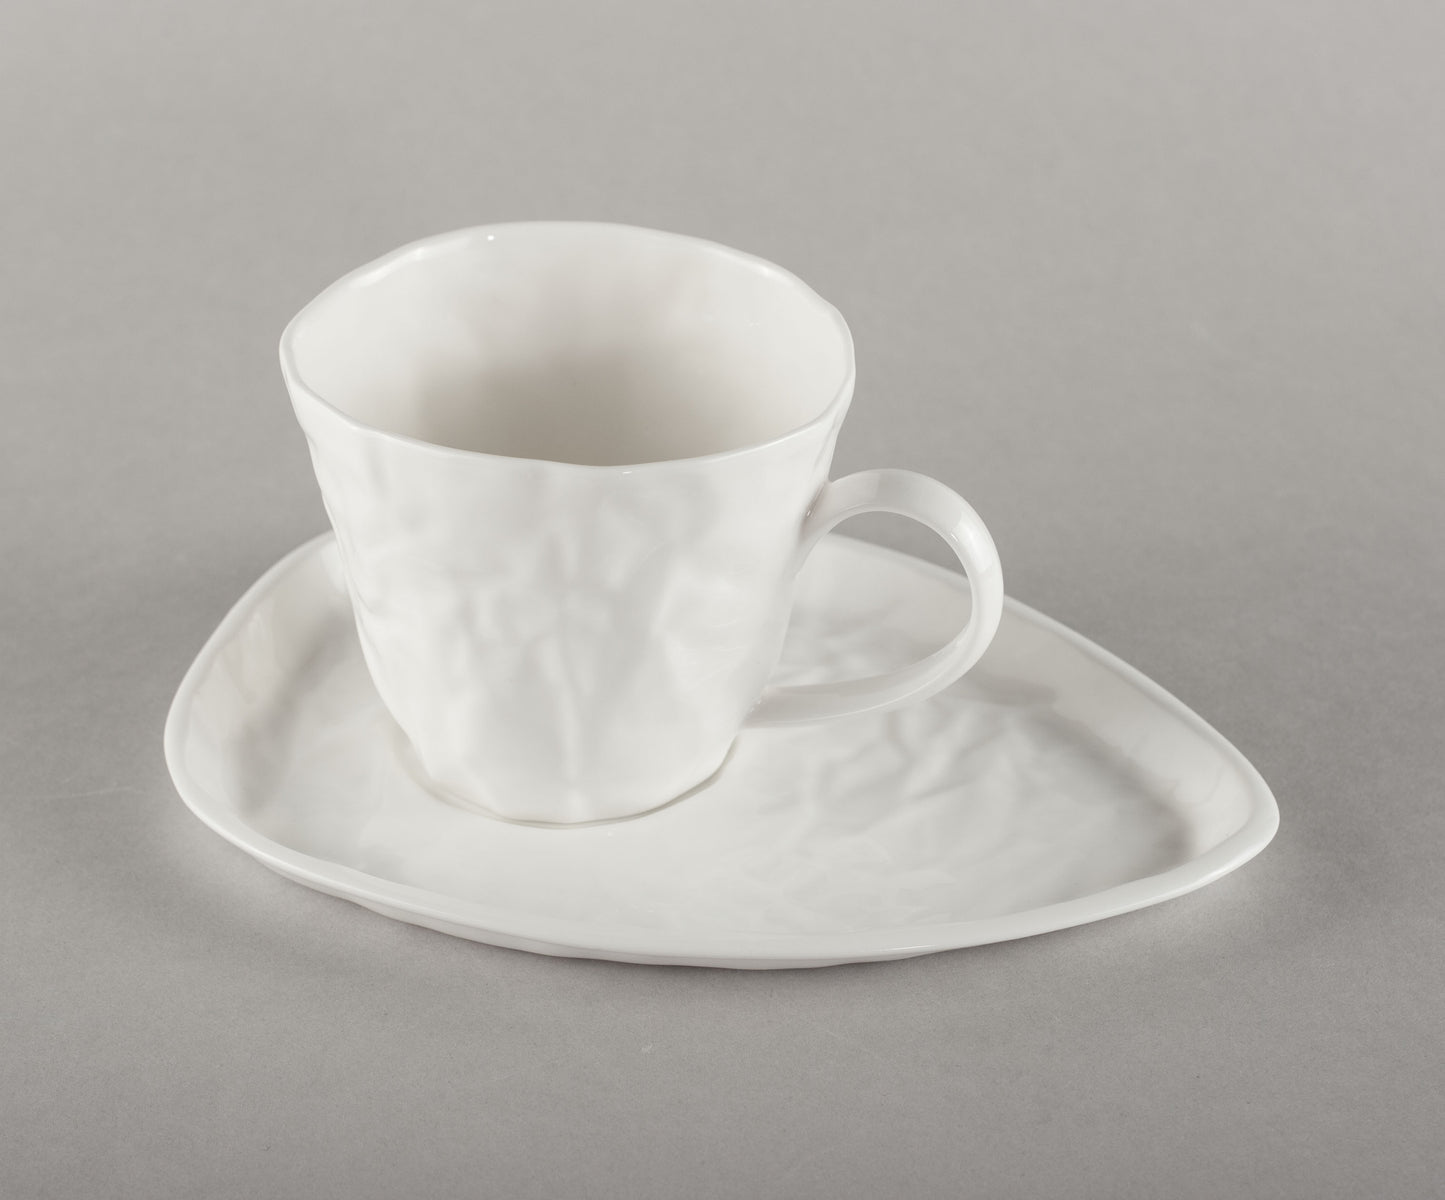 Porcelain Crumpled Coffee Co Mug Base (mug not included)